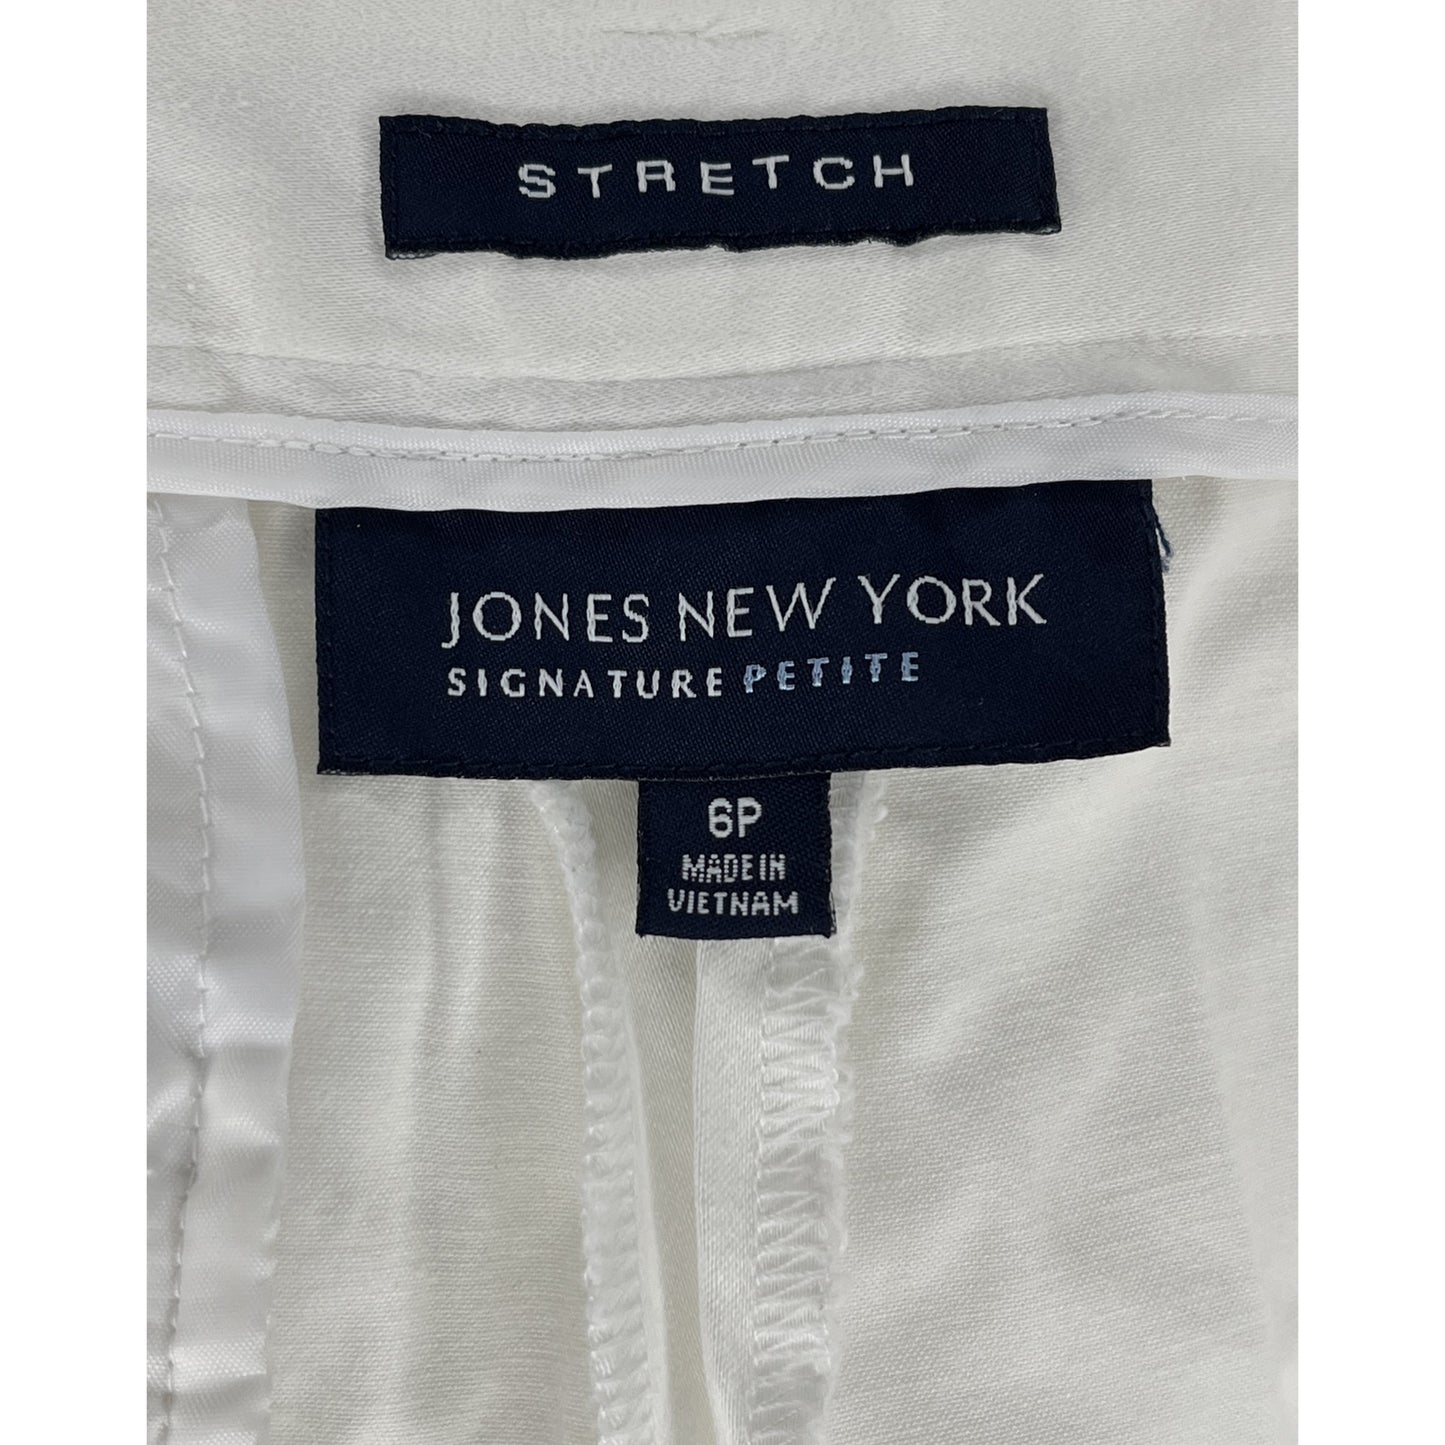 Jones New York Capri Pants White Size 6P SKU 000415